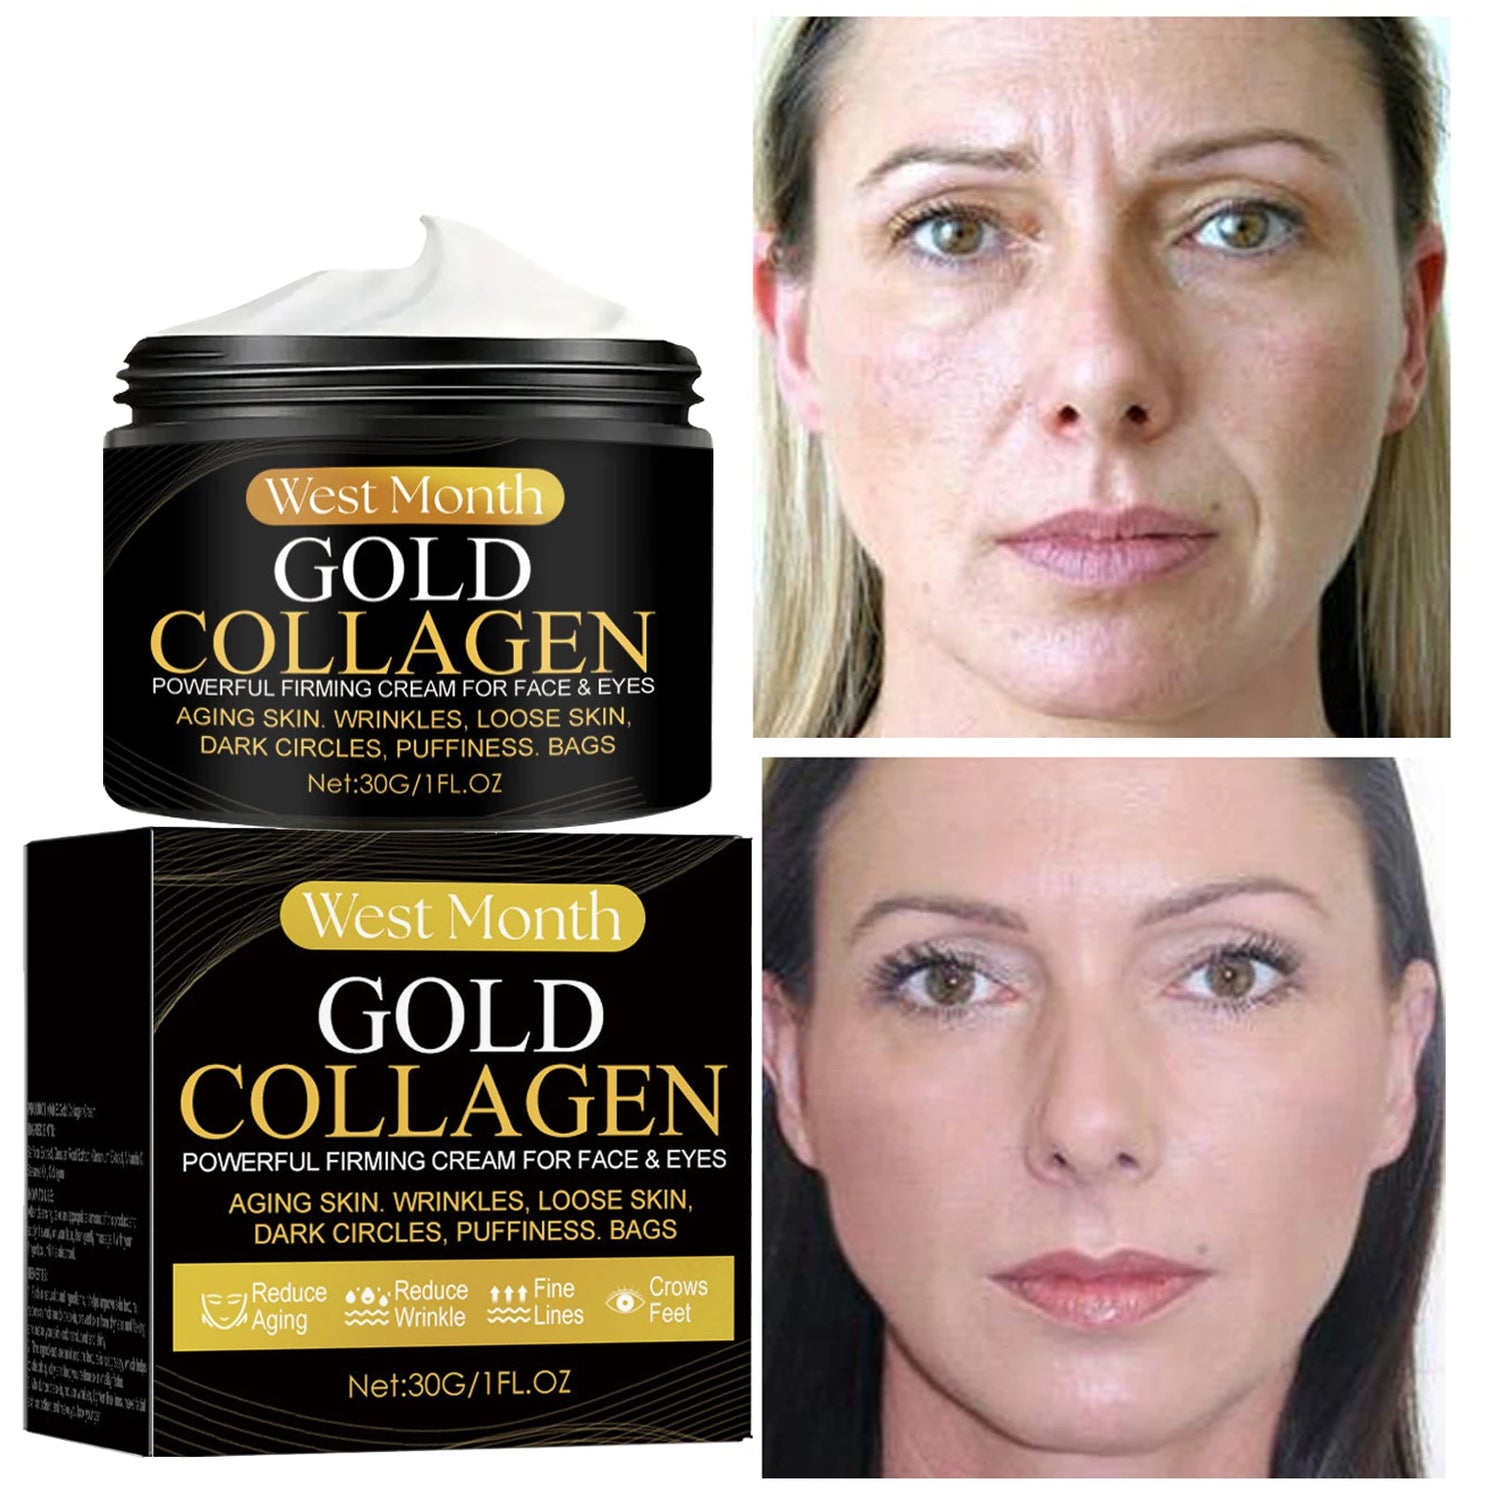 Collagen Wrinkle Removal Cream Whitening Moisturizing Tighten Anti-aging Removing Wrinkle Fine Lines Dark Spot Skin Care Beauty